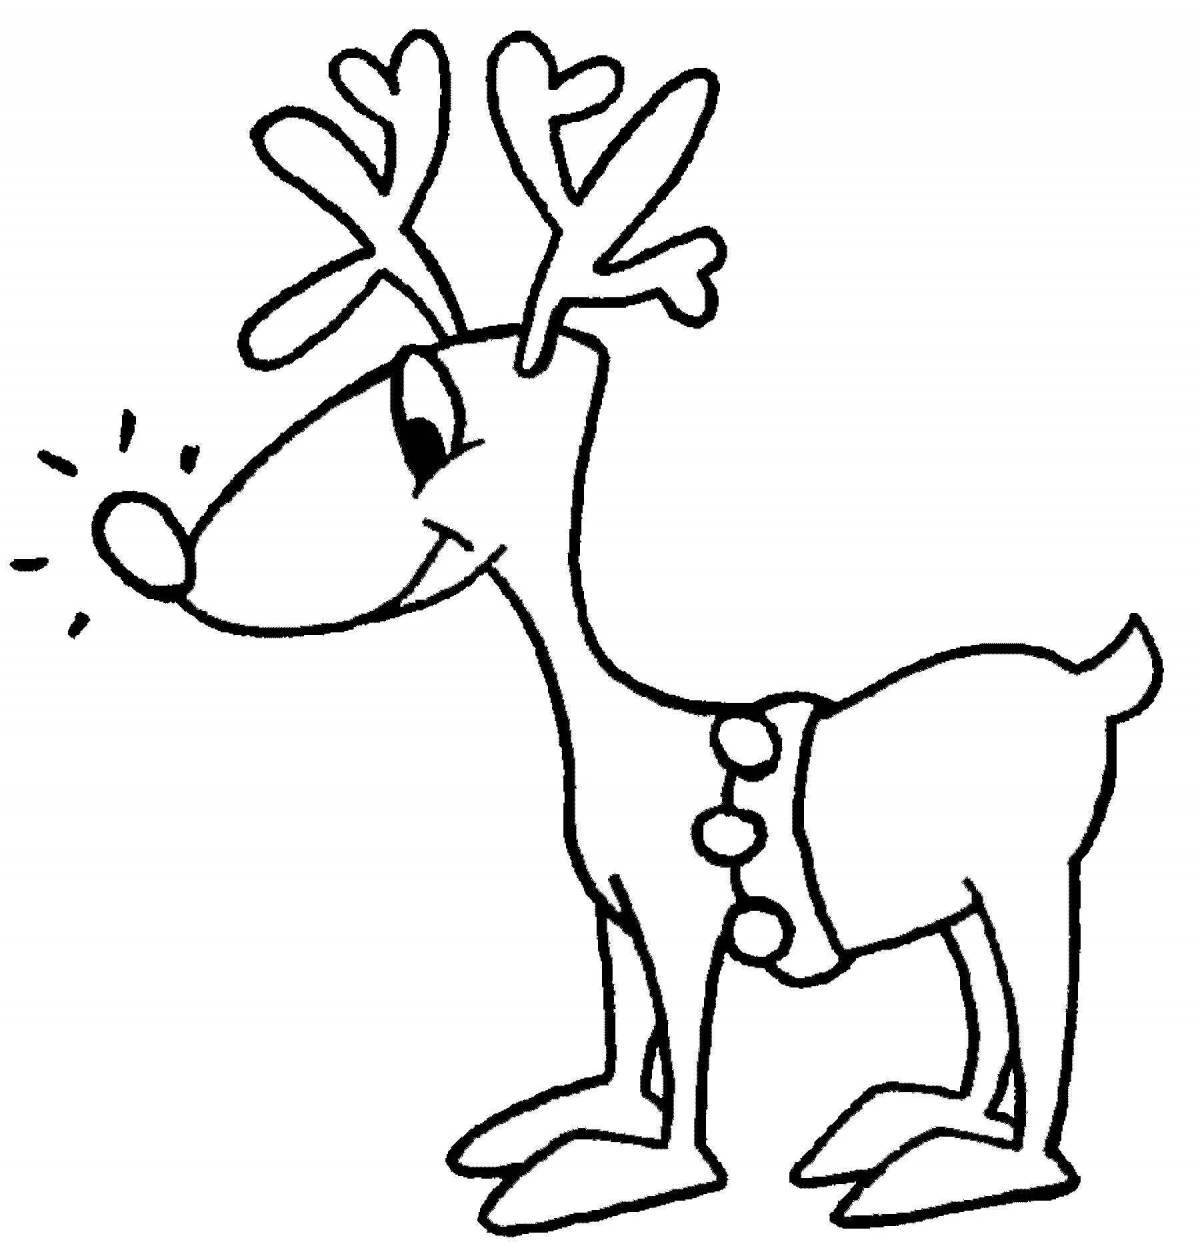 Rampant Christmas deer